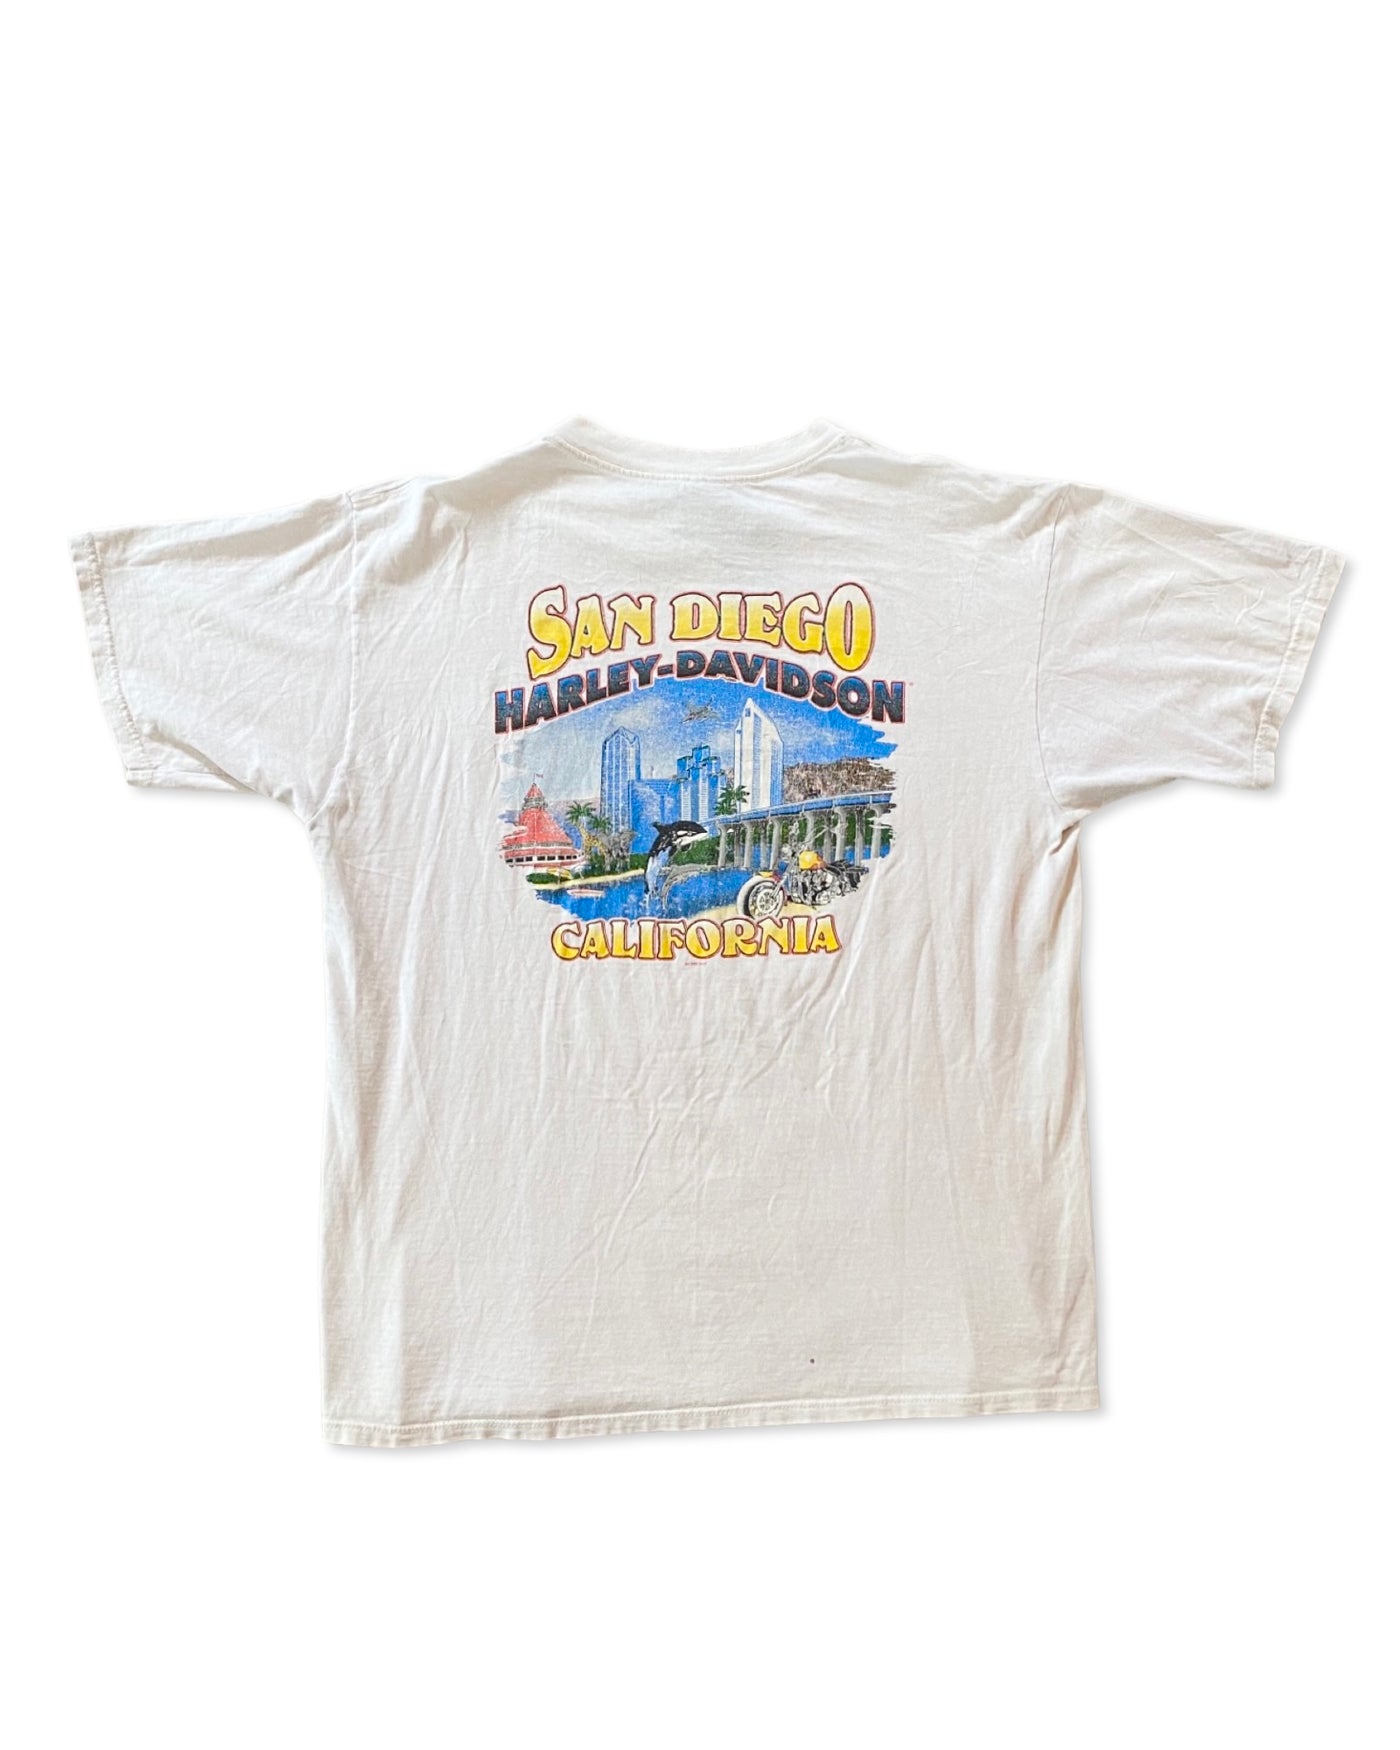 Vintage 1995 San Diego Harley Pocket T-Shirt